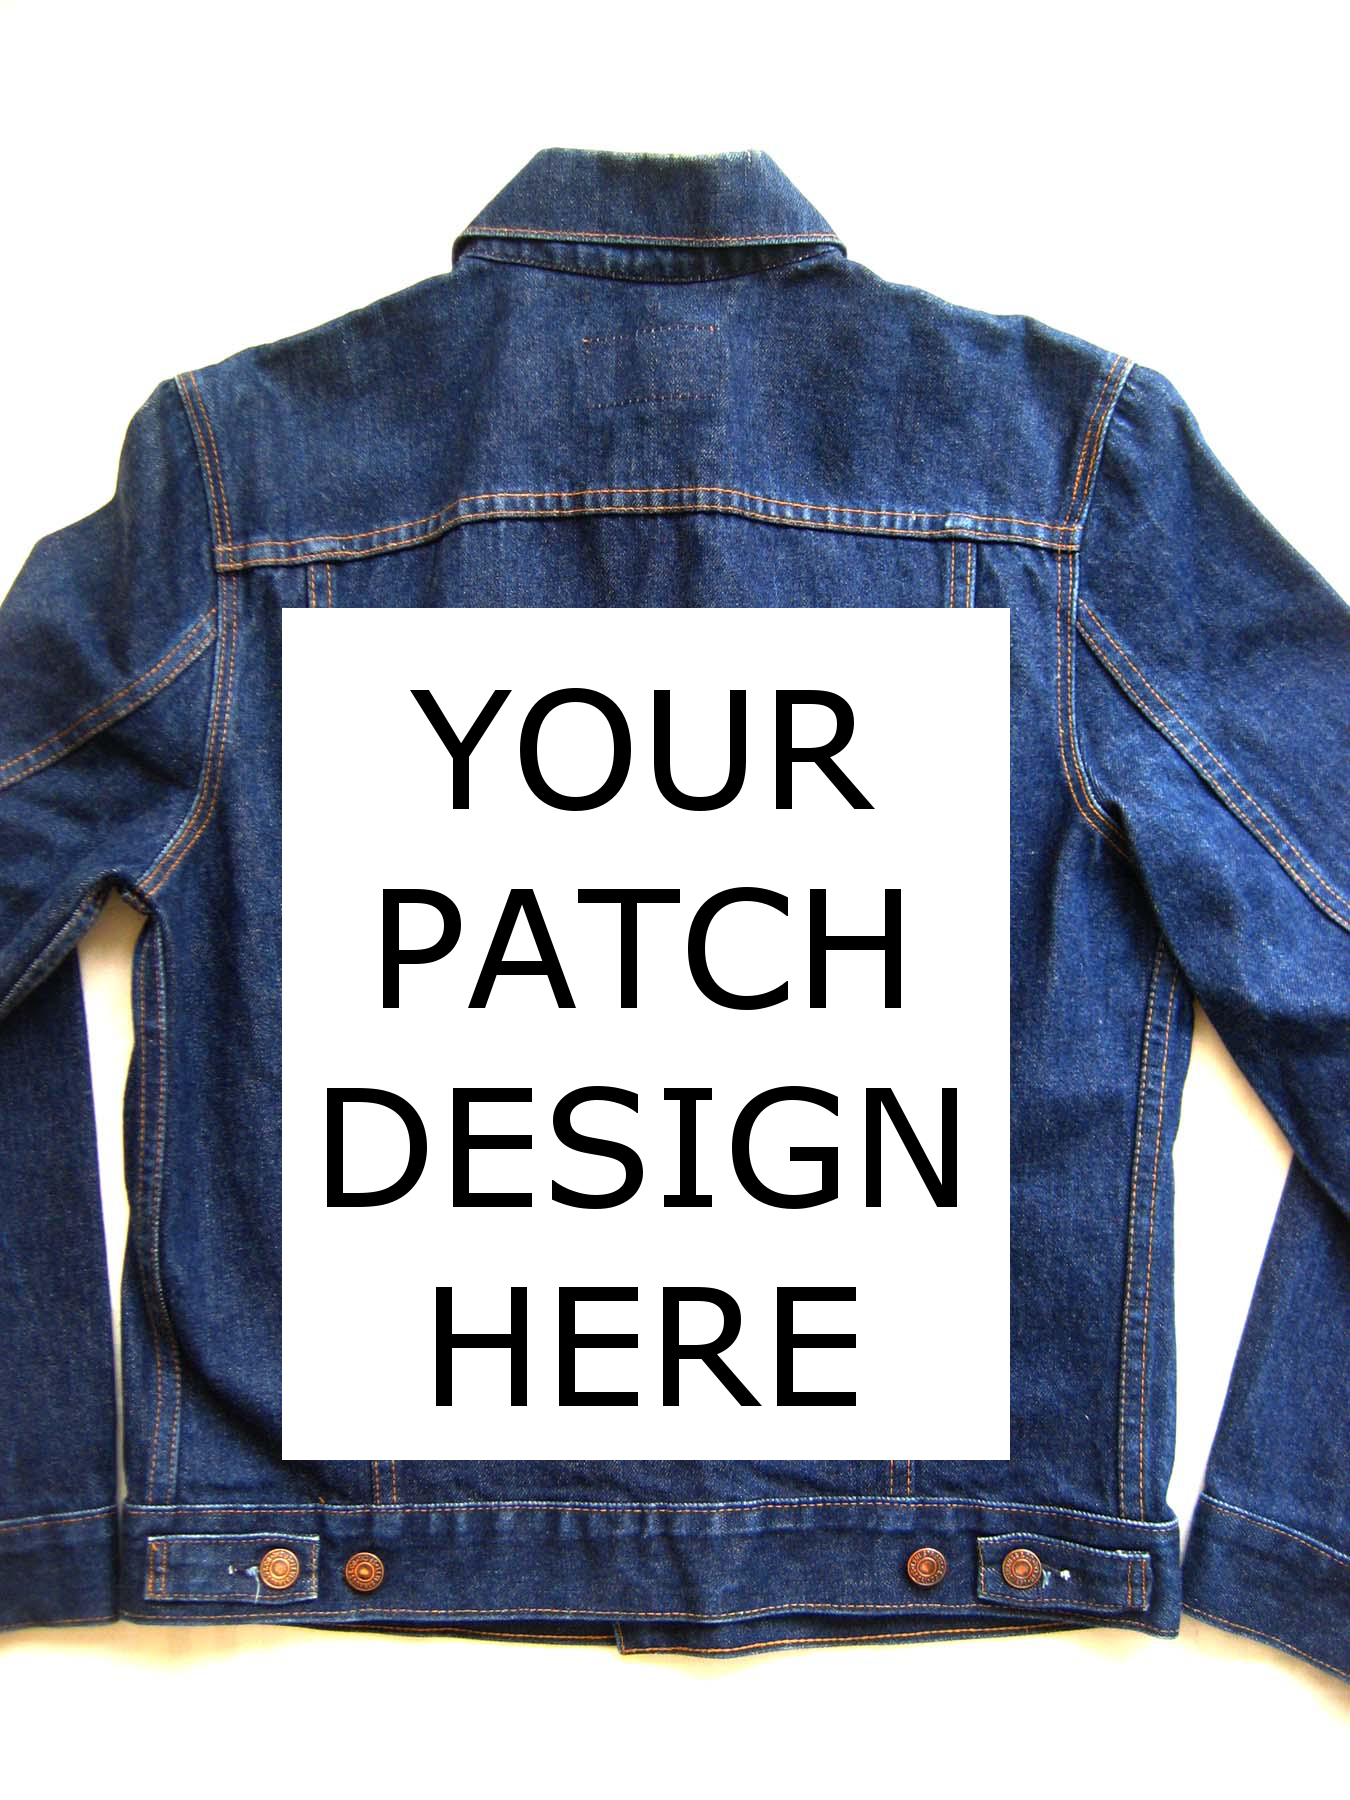 jean jacket back patch